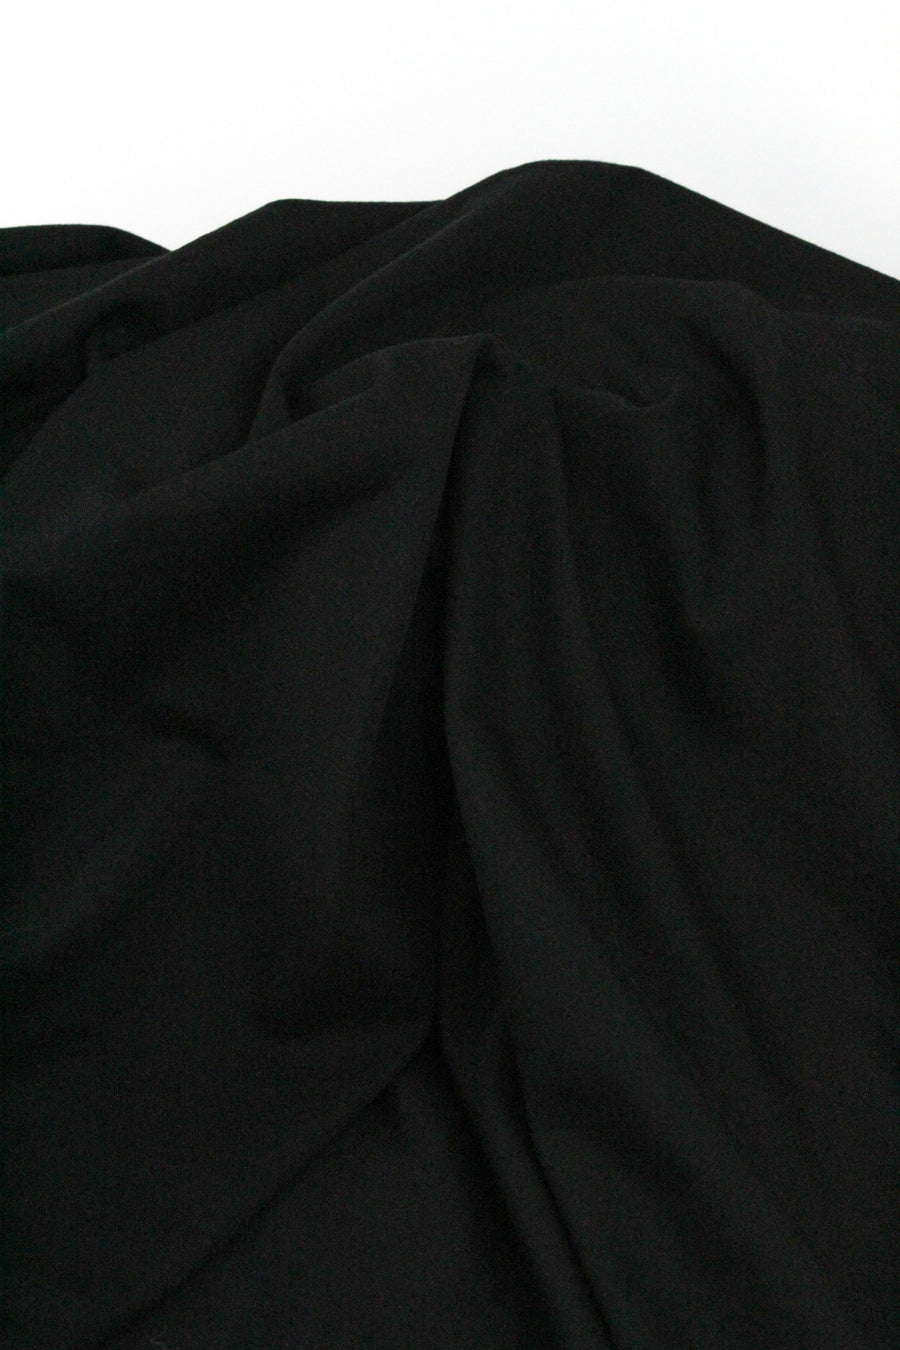 Raewyn - Soft Touch Cotton Jersey | Black #11